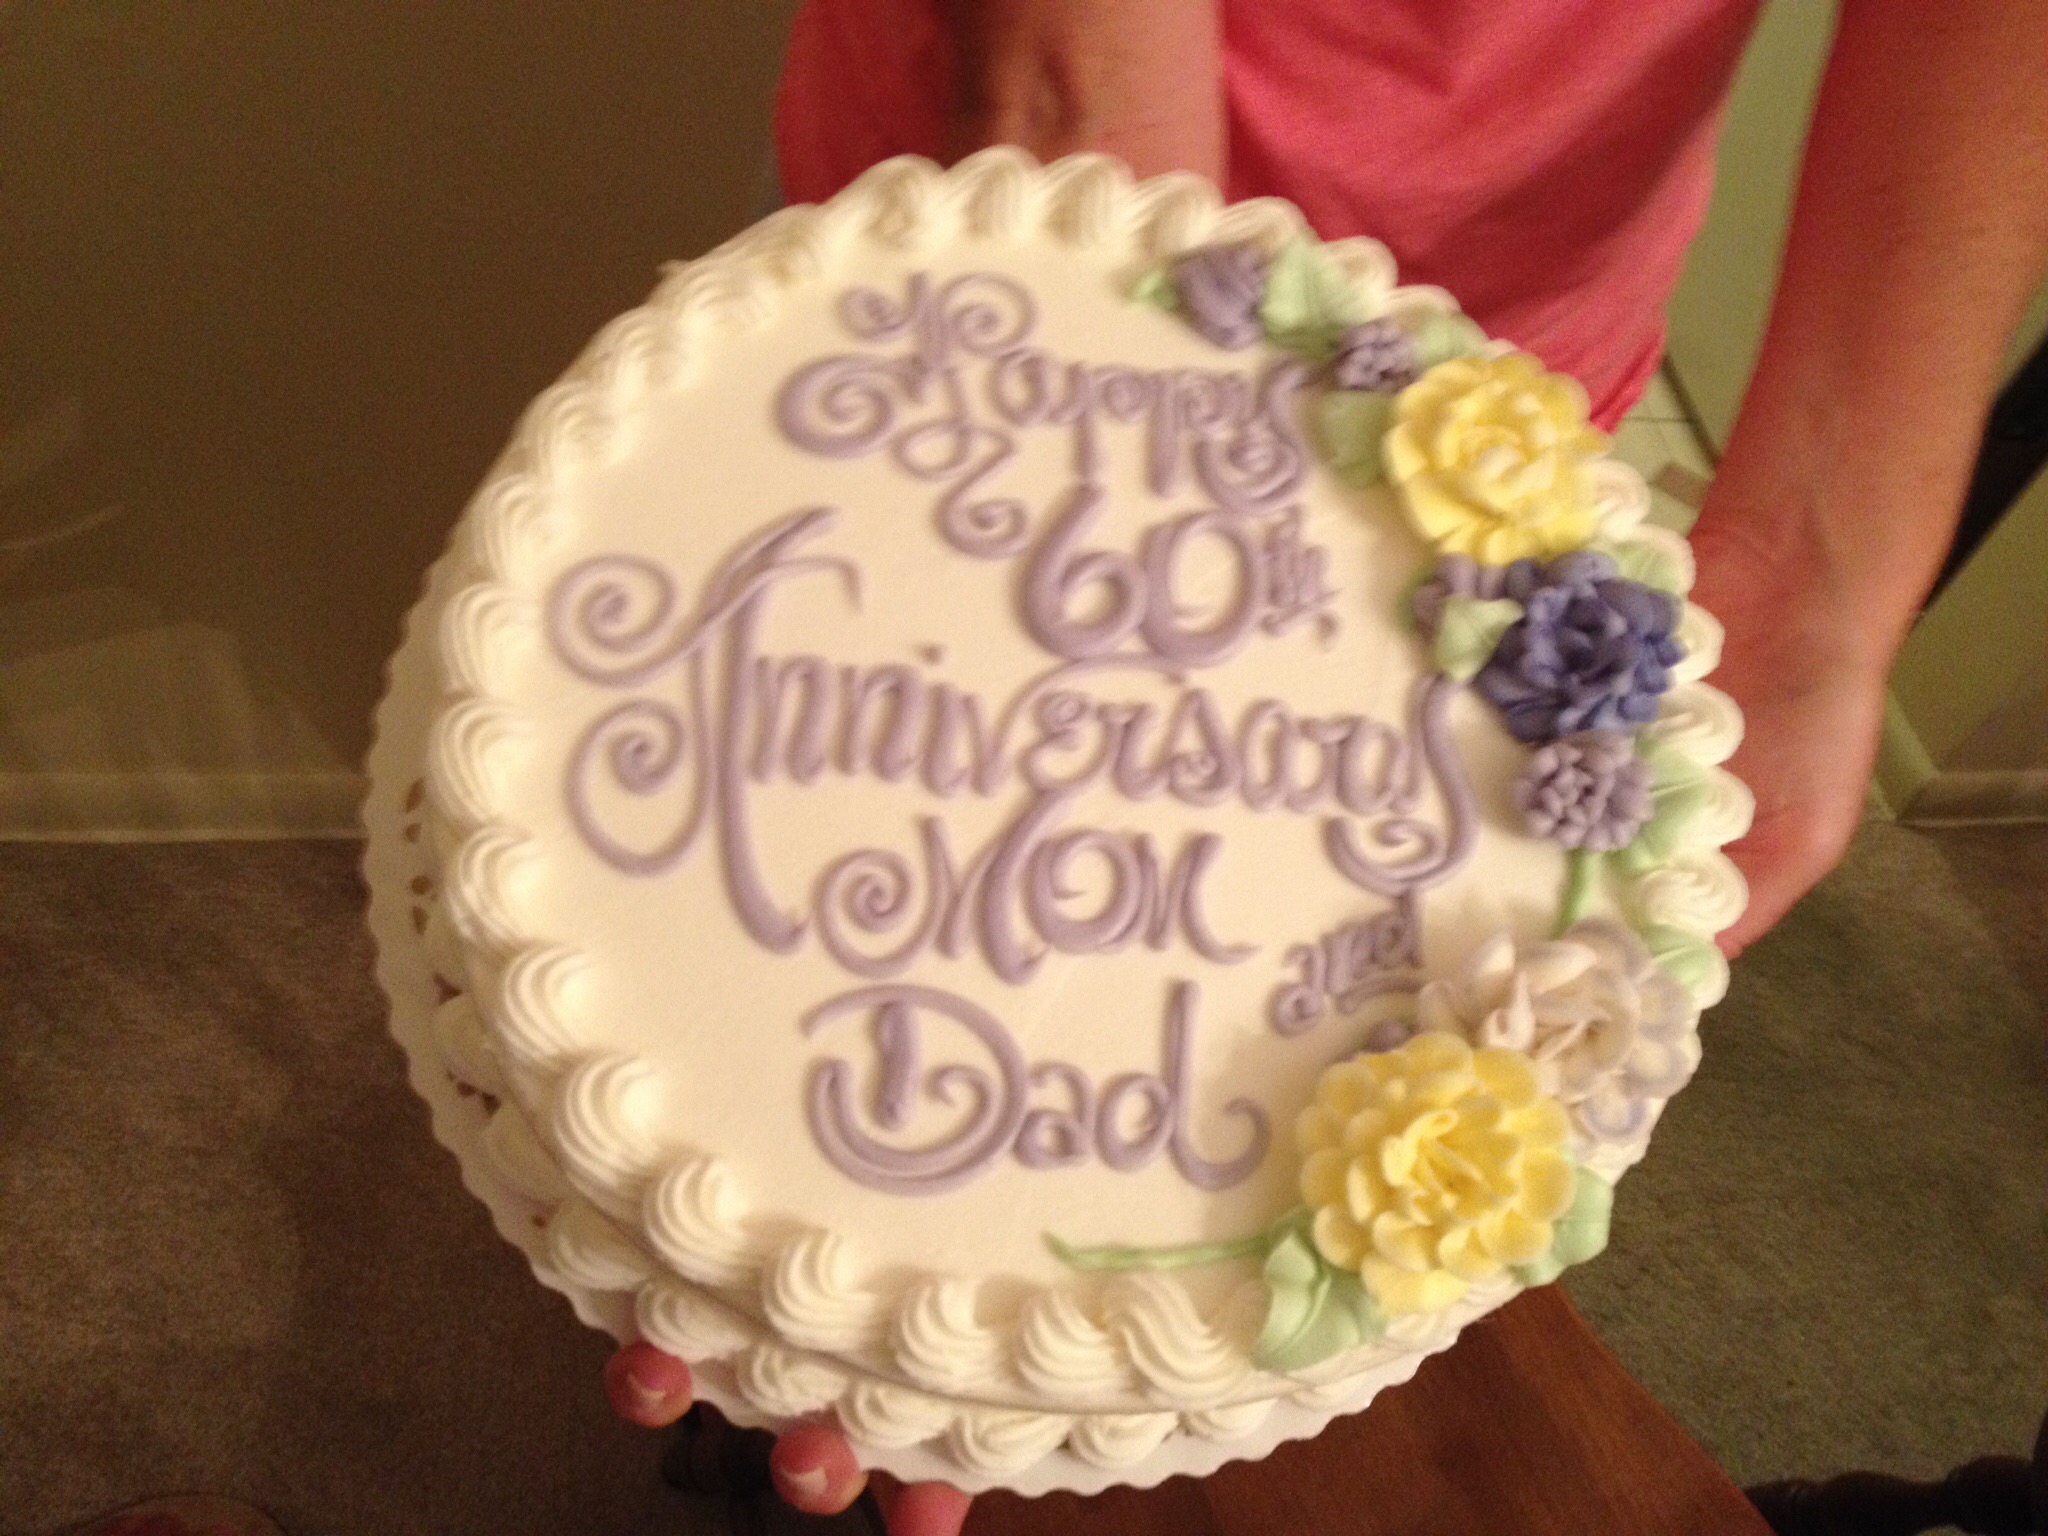 Happy Anniversary Mom & Dad - Cake Decorating - HD Wallpaper 